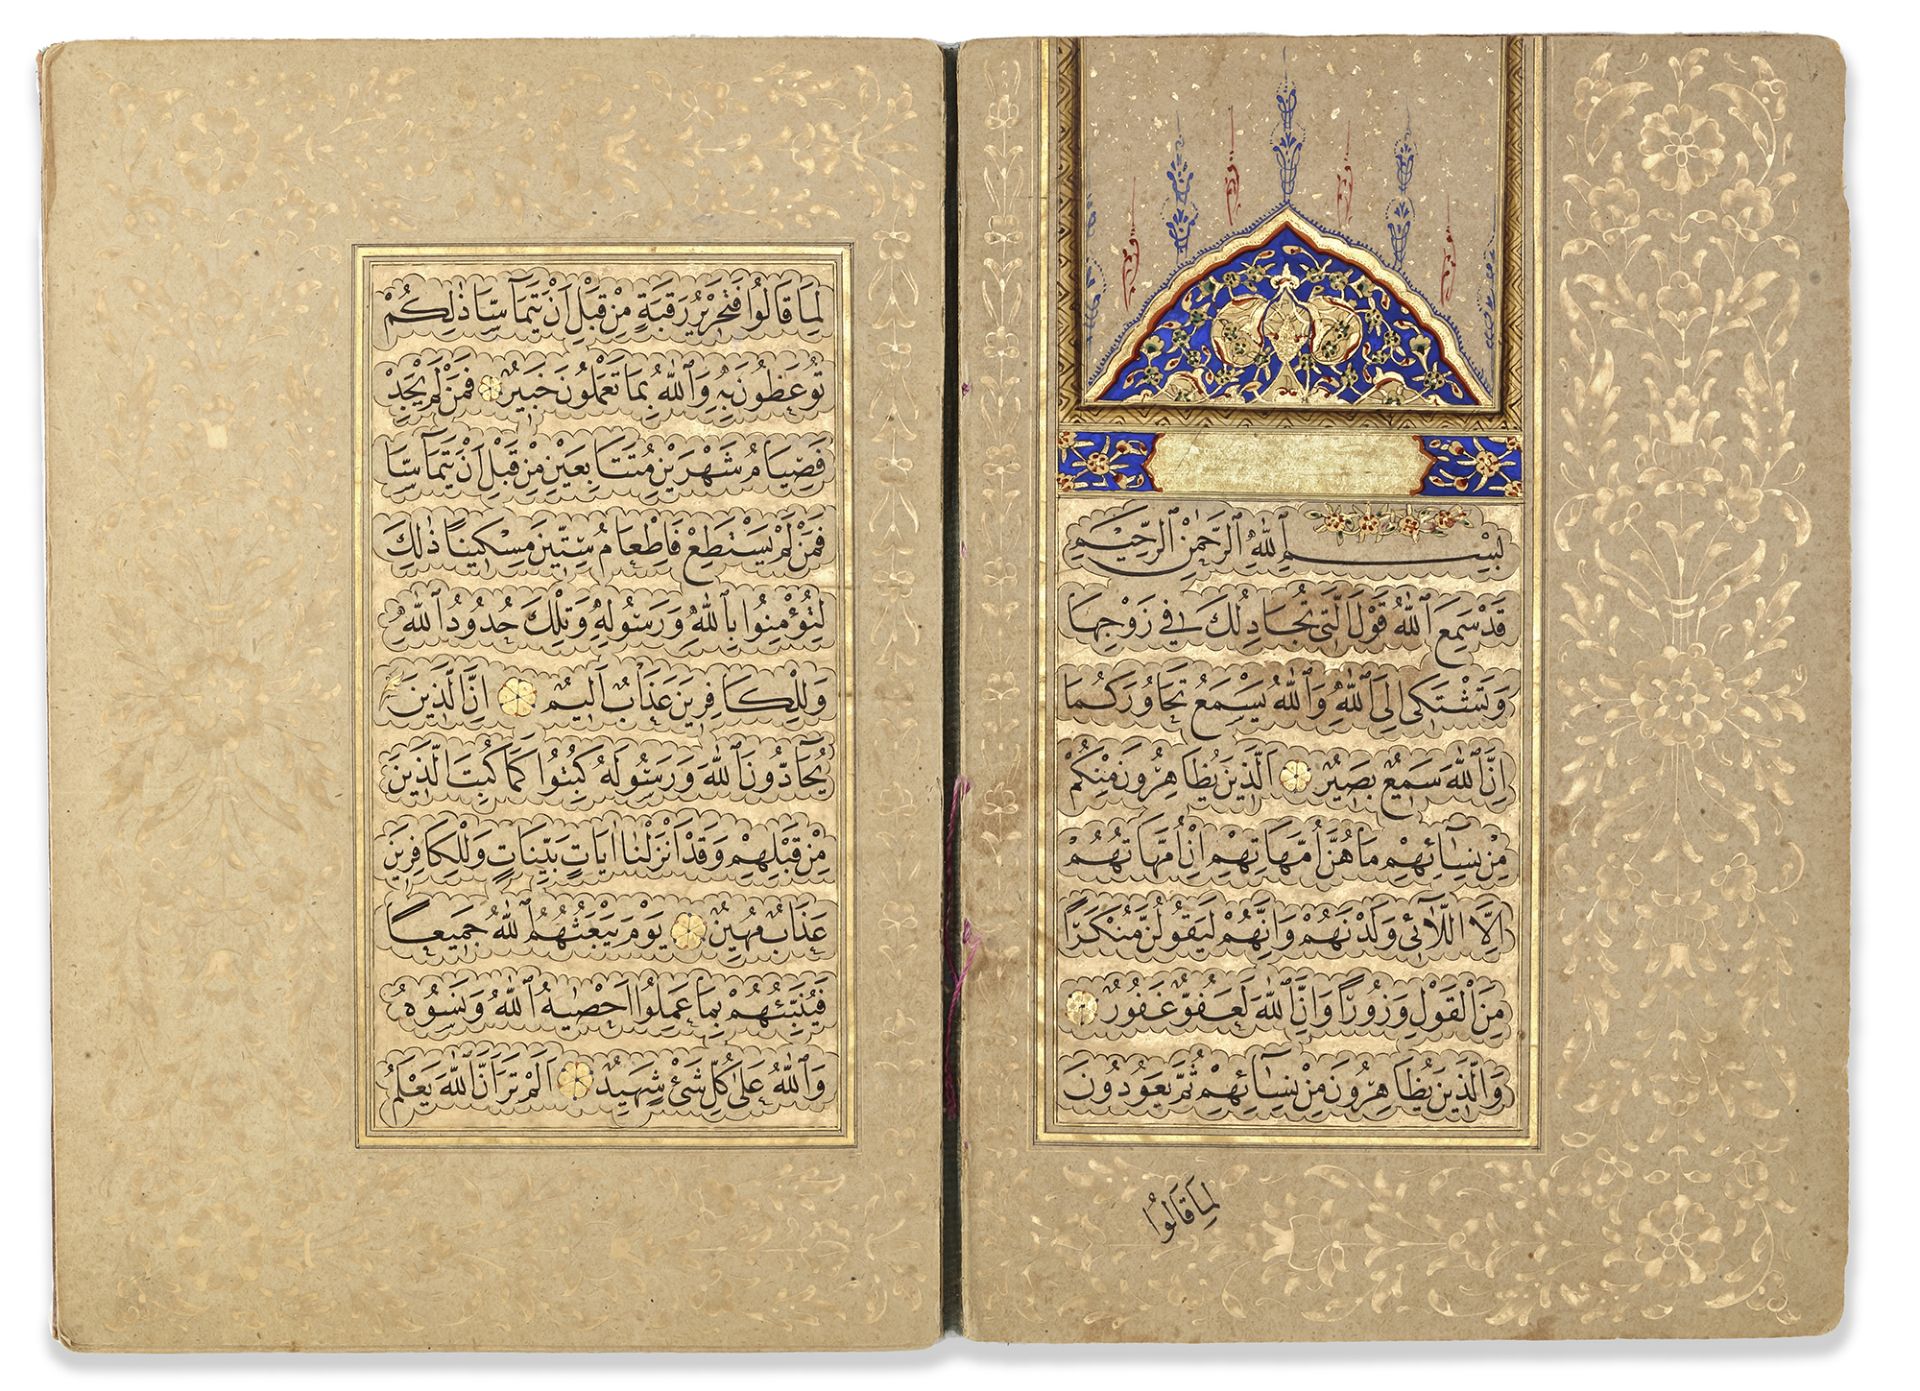 AN ILLUMINATED QURAN JUZ SIGNED BY YAHYA HELMI EFENDI, OTTOMAN TURKEY, 19TH CENTURY